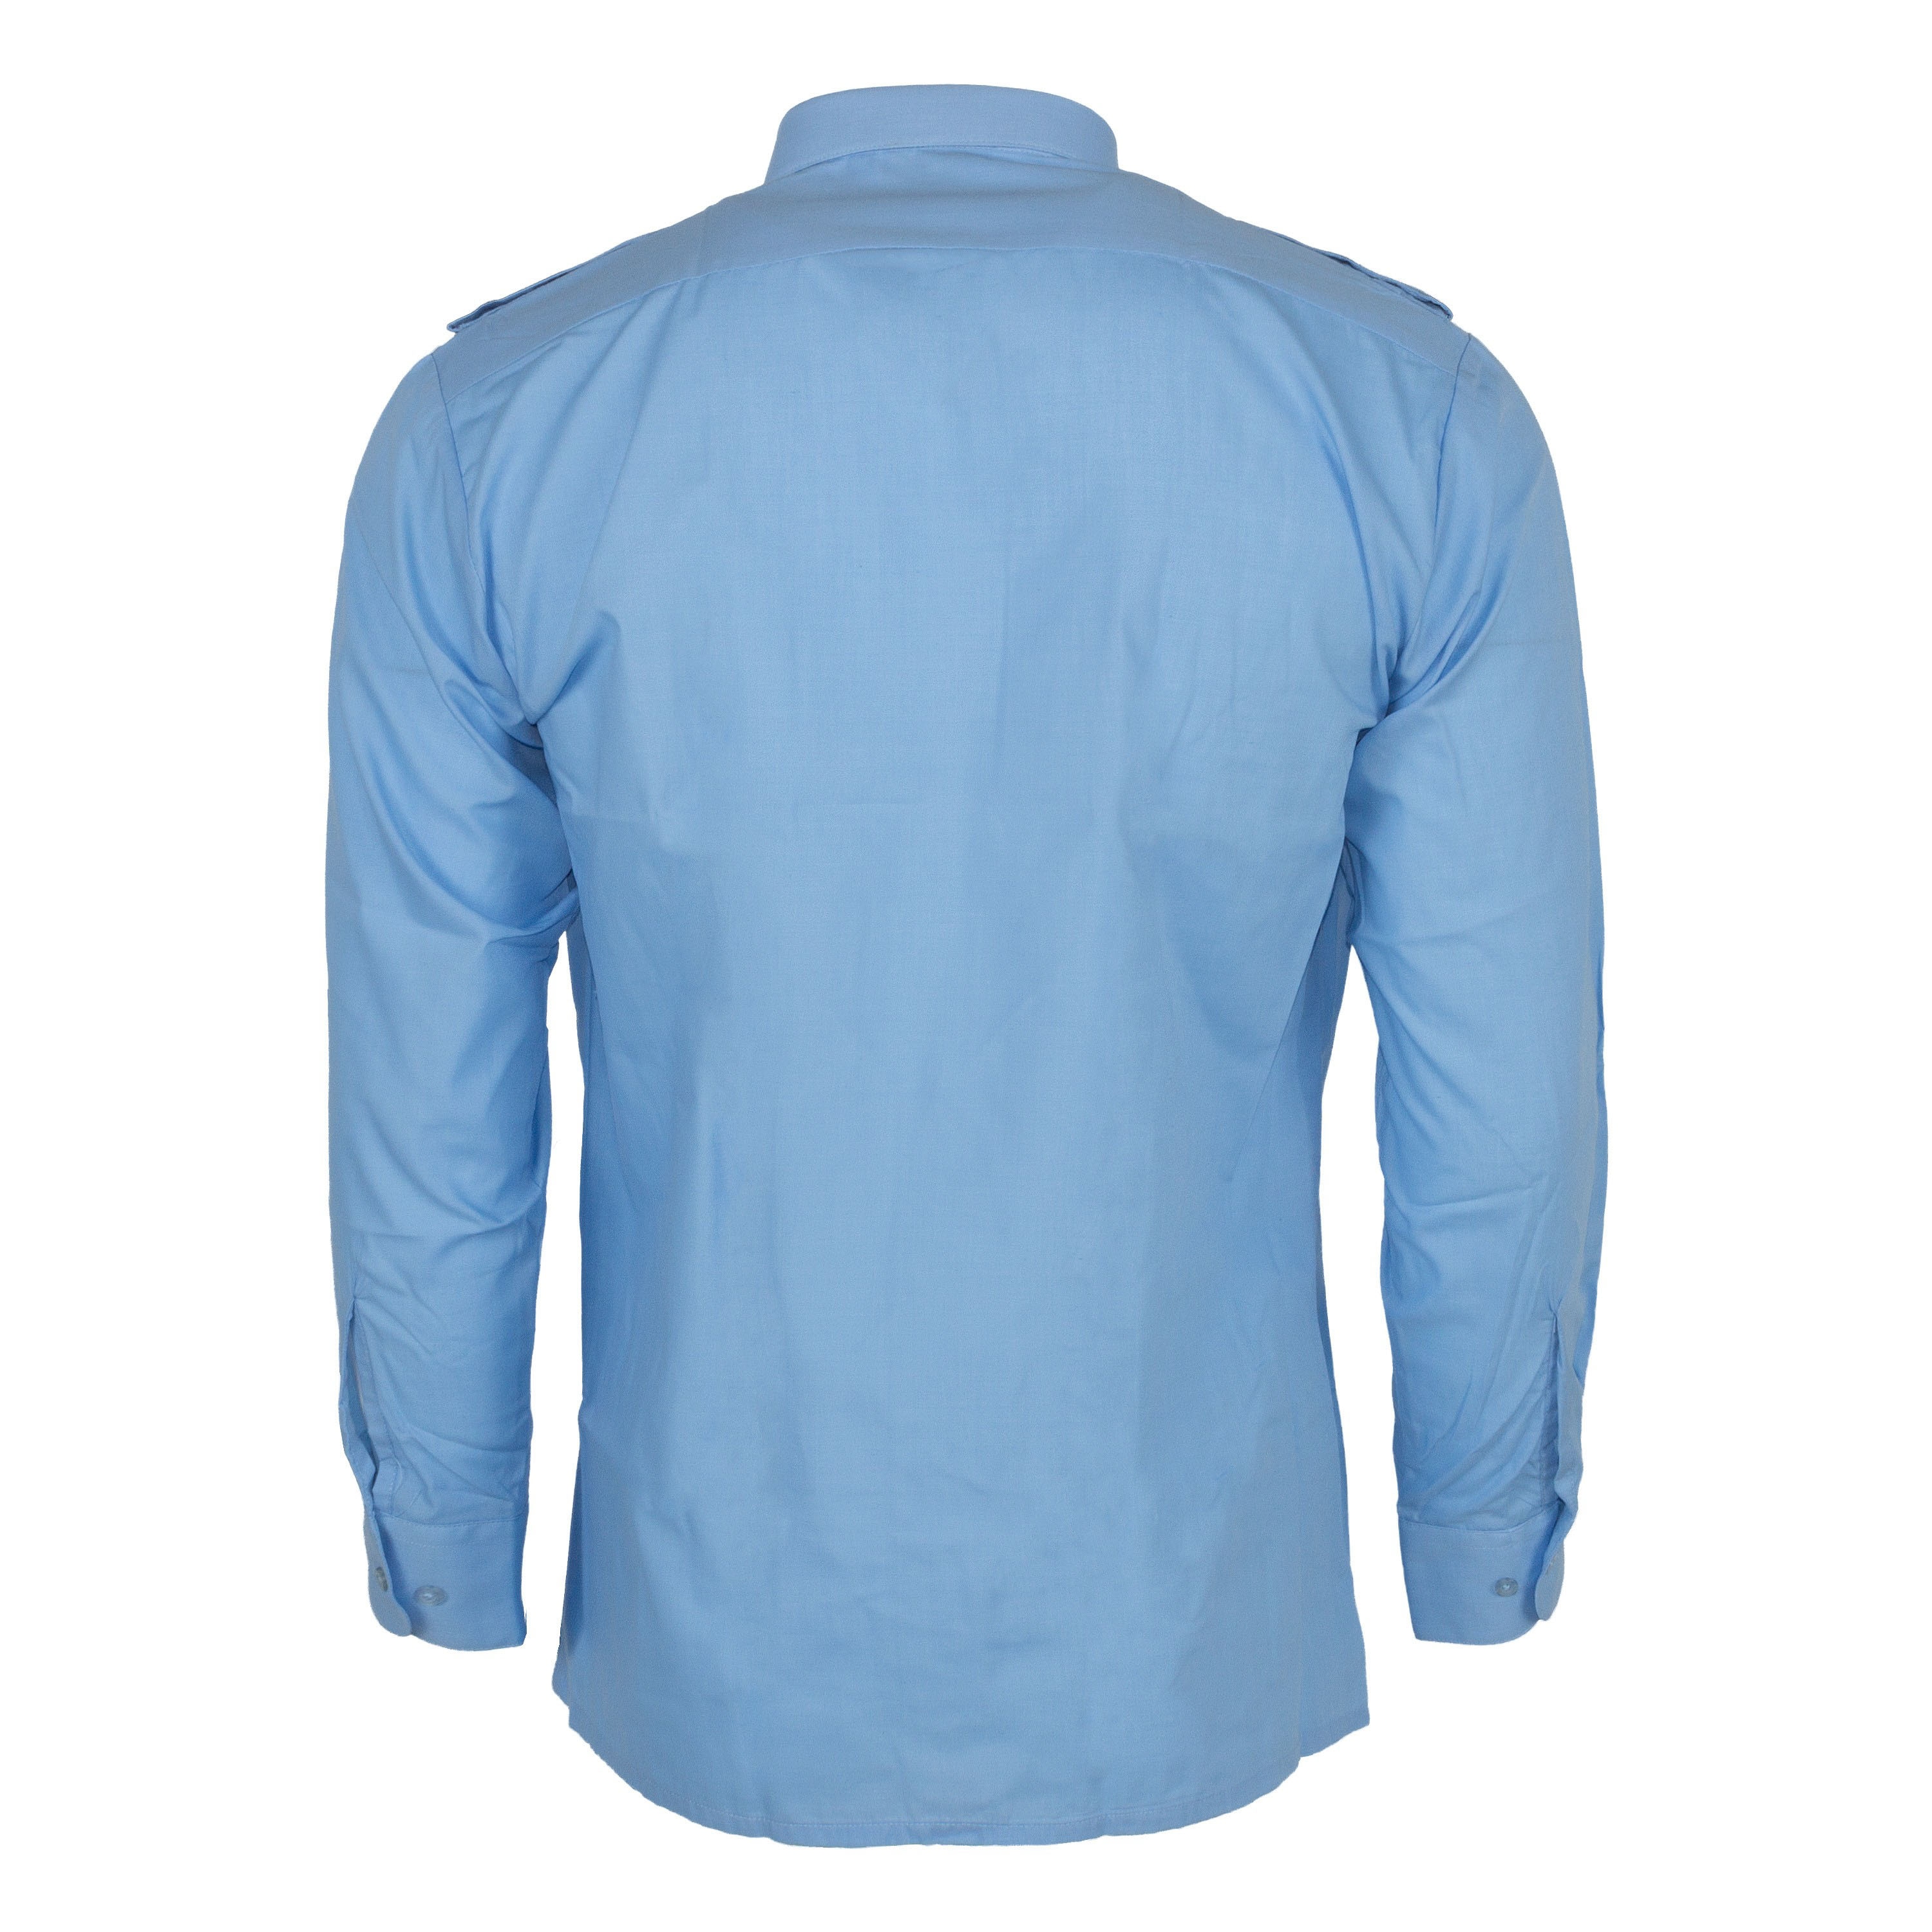 Service Shirt Long Sleeve blue | Service Shirt Long Sleeve blue | Long ...